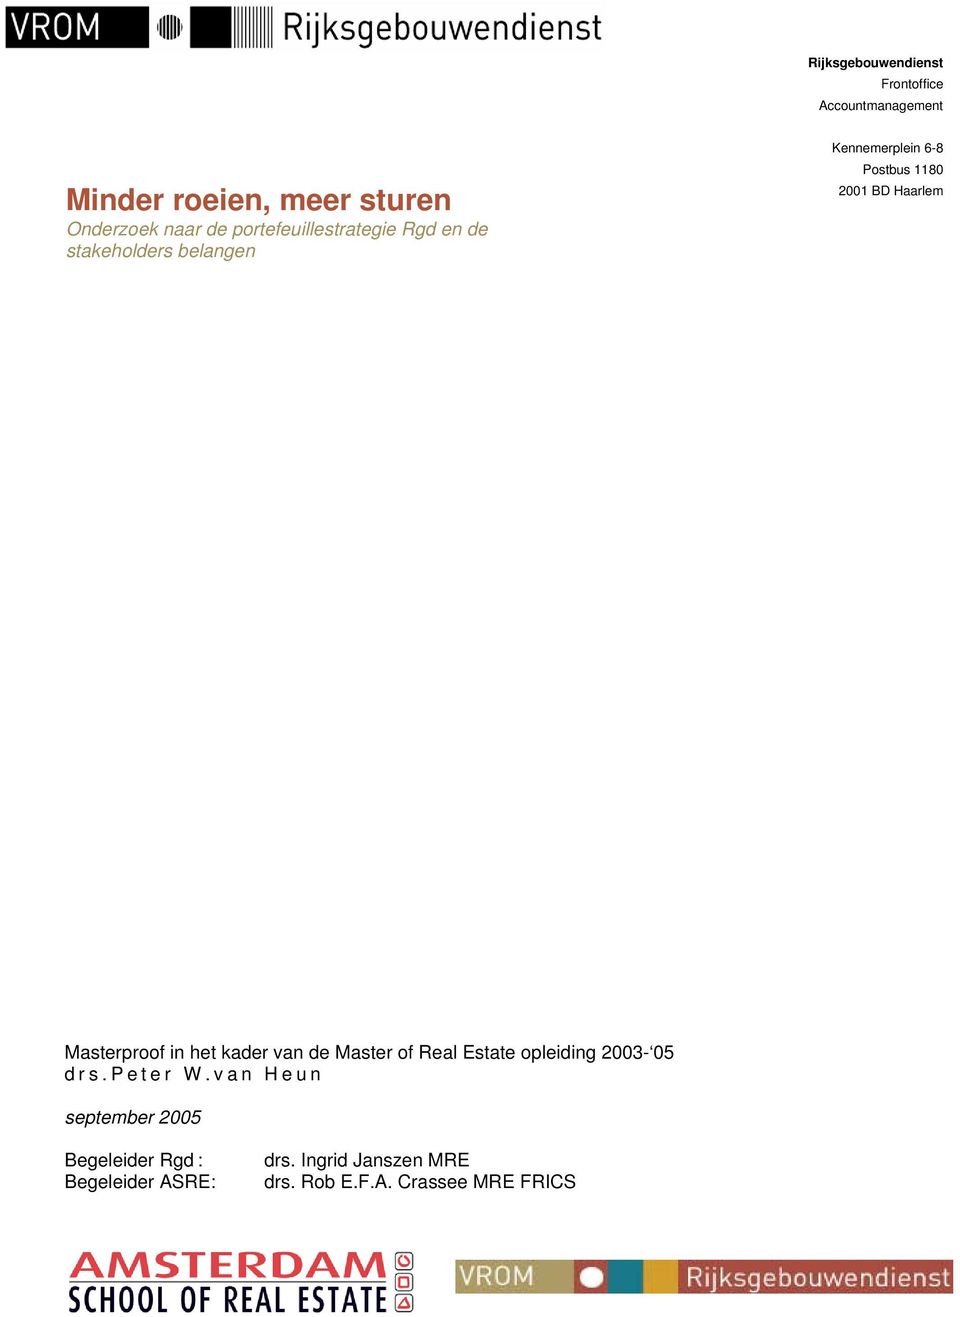 Haarlem Masterproof in het kader van de Master of Real Estate opleiding 2003-05 drs.peter W.